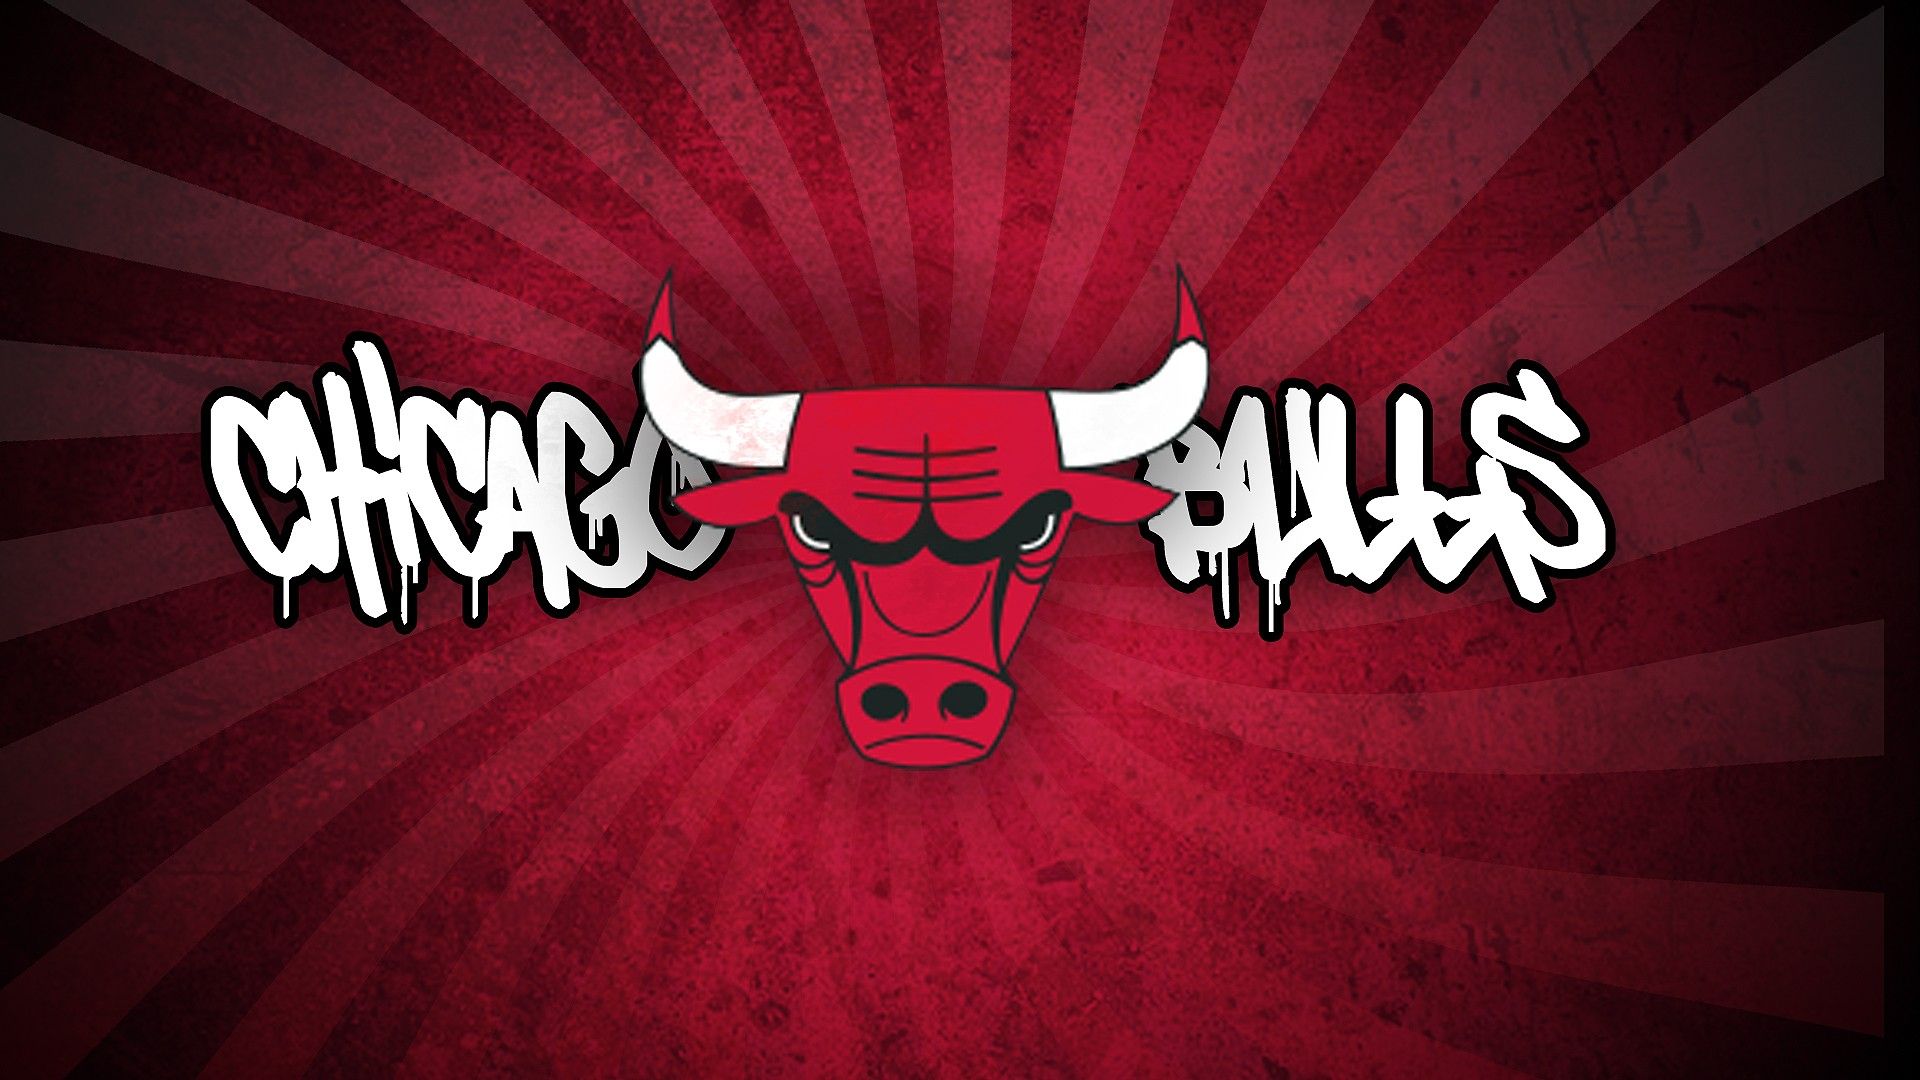 Windows Wallpaper Chicago Bulls Basketball Wallpaper. Chicago bulls wallpaper, Bulls wallpaper, Chicago bulls logo